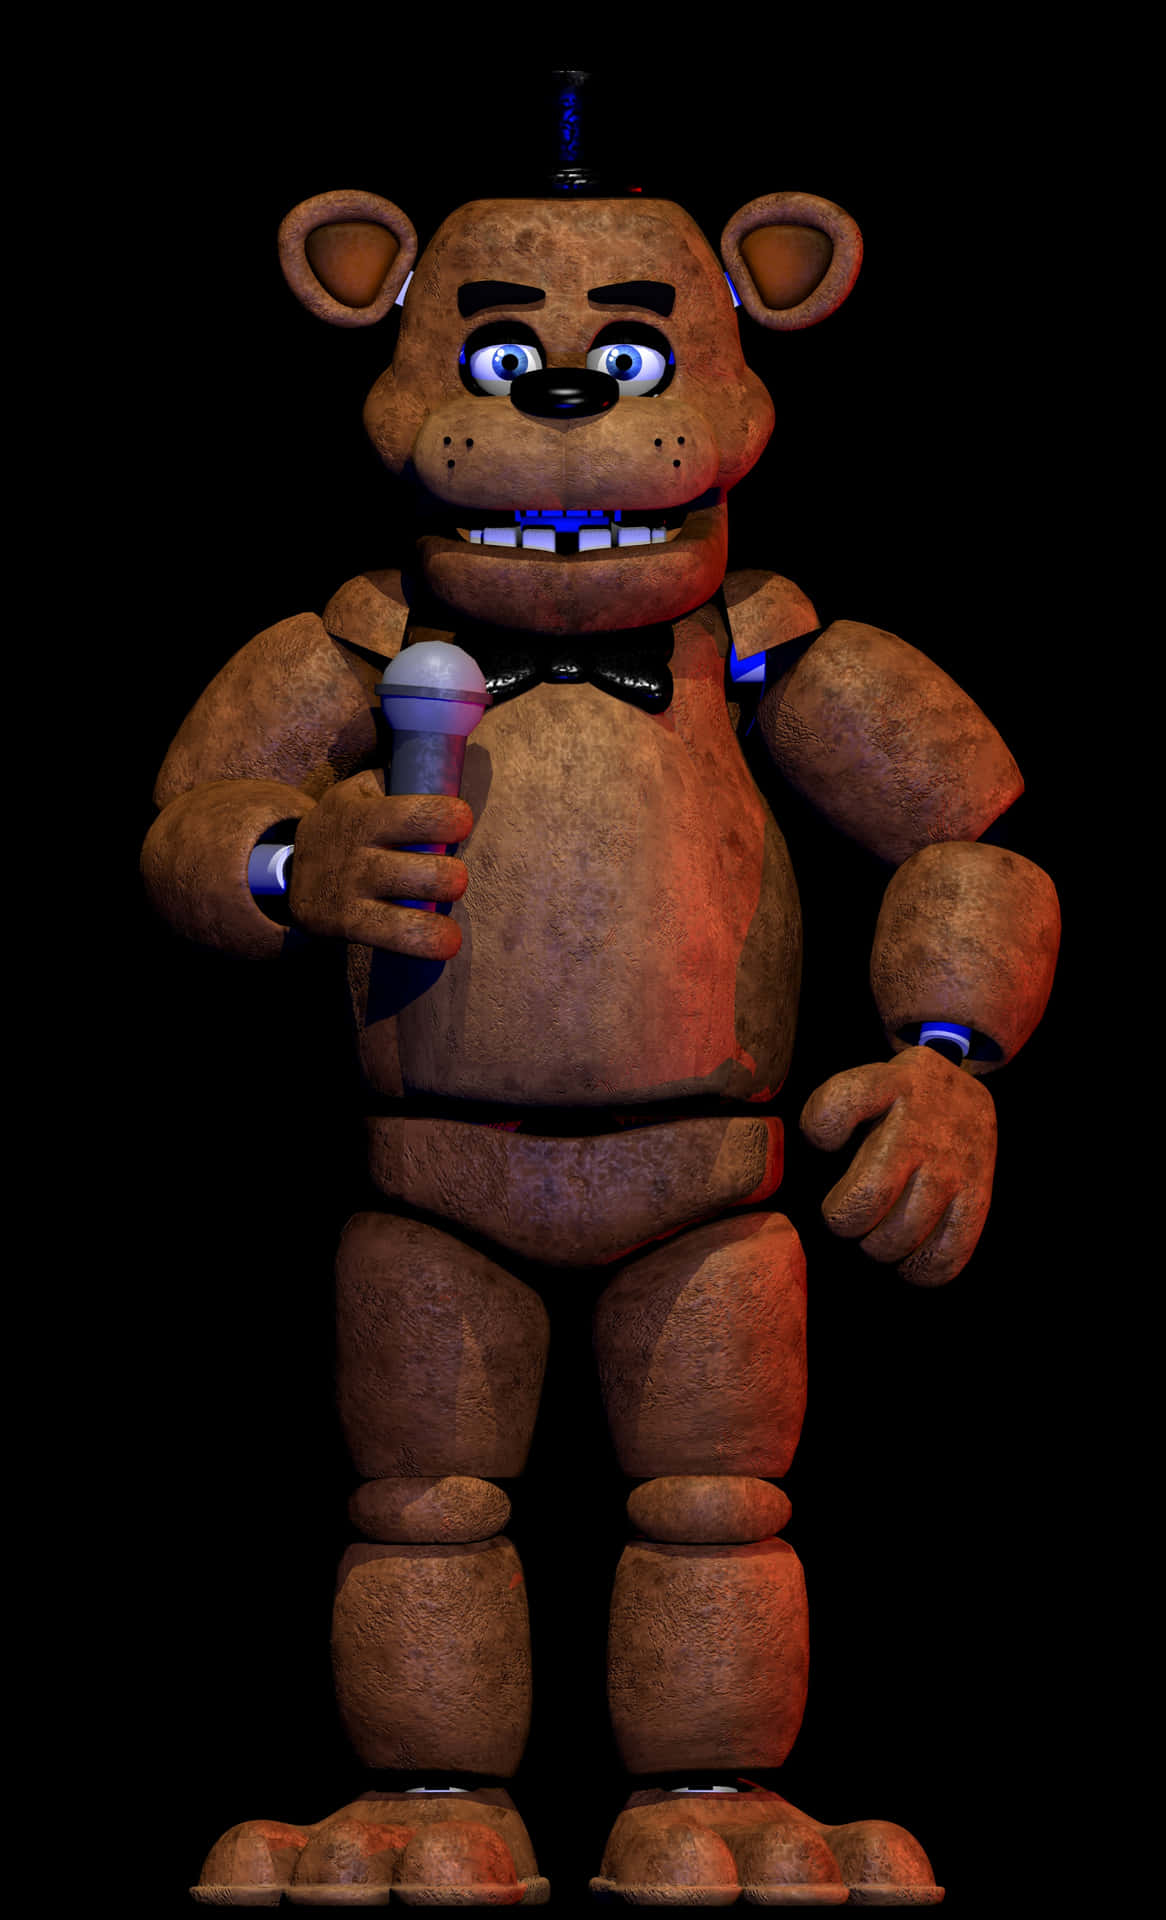 Freddy Fazbear, the animatronic bear